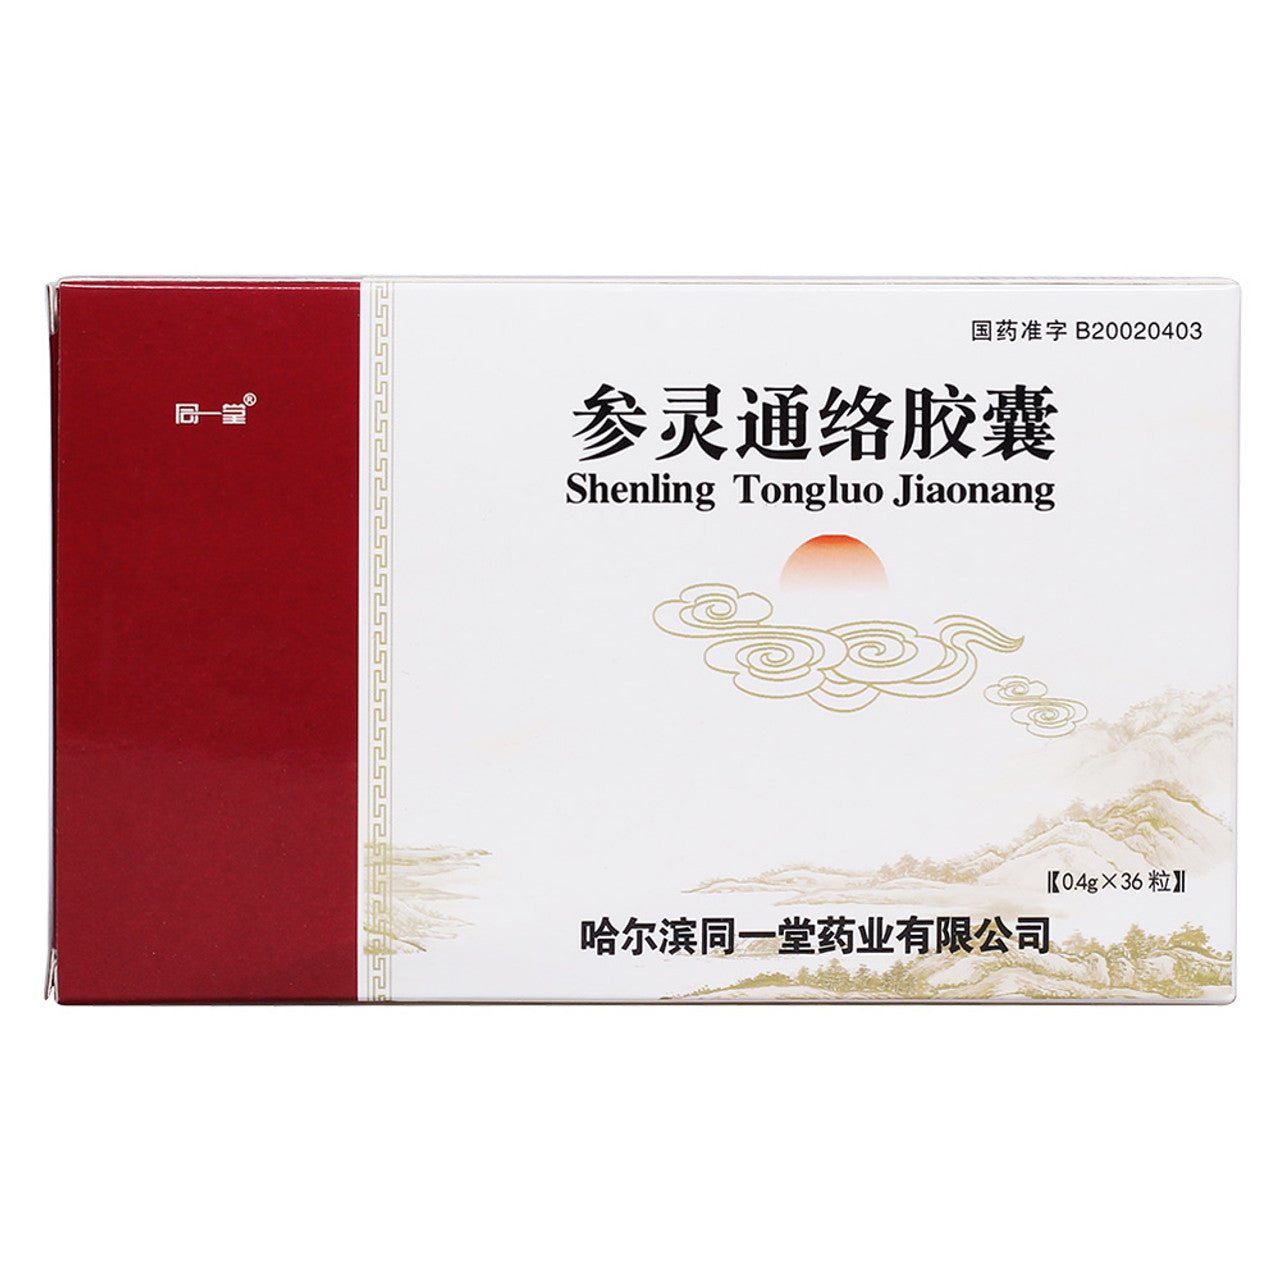 China Herb. Brand Tongyitang. Shenling Tongluo Jiaonang or Shenling Tongluo Capsules or ShenlingTongluoJiaonang or Shen Ling Tong Luo Jiao Nang or Shen Ling Tong Luo Capsules For Peripheral Neuropathy